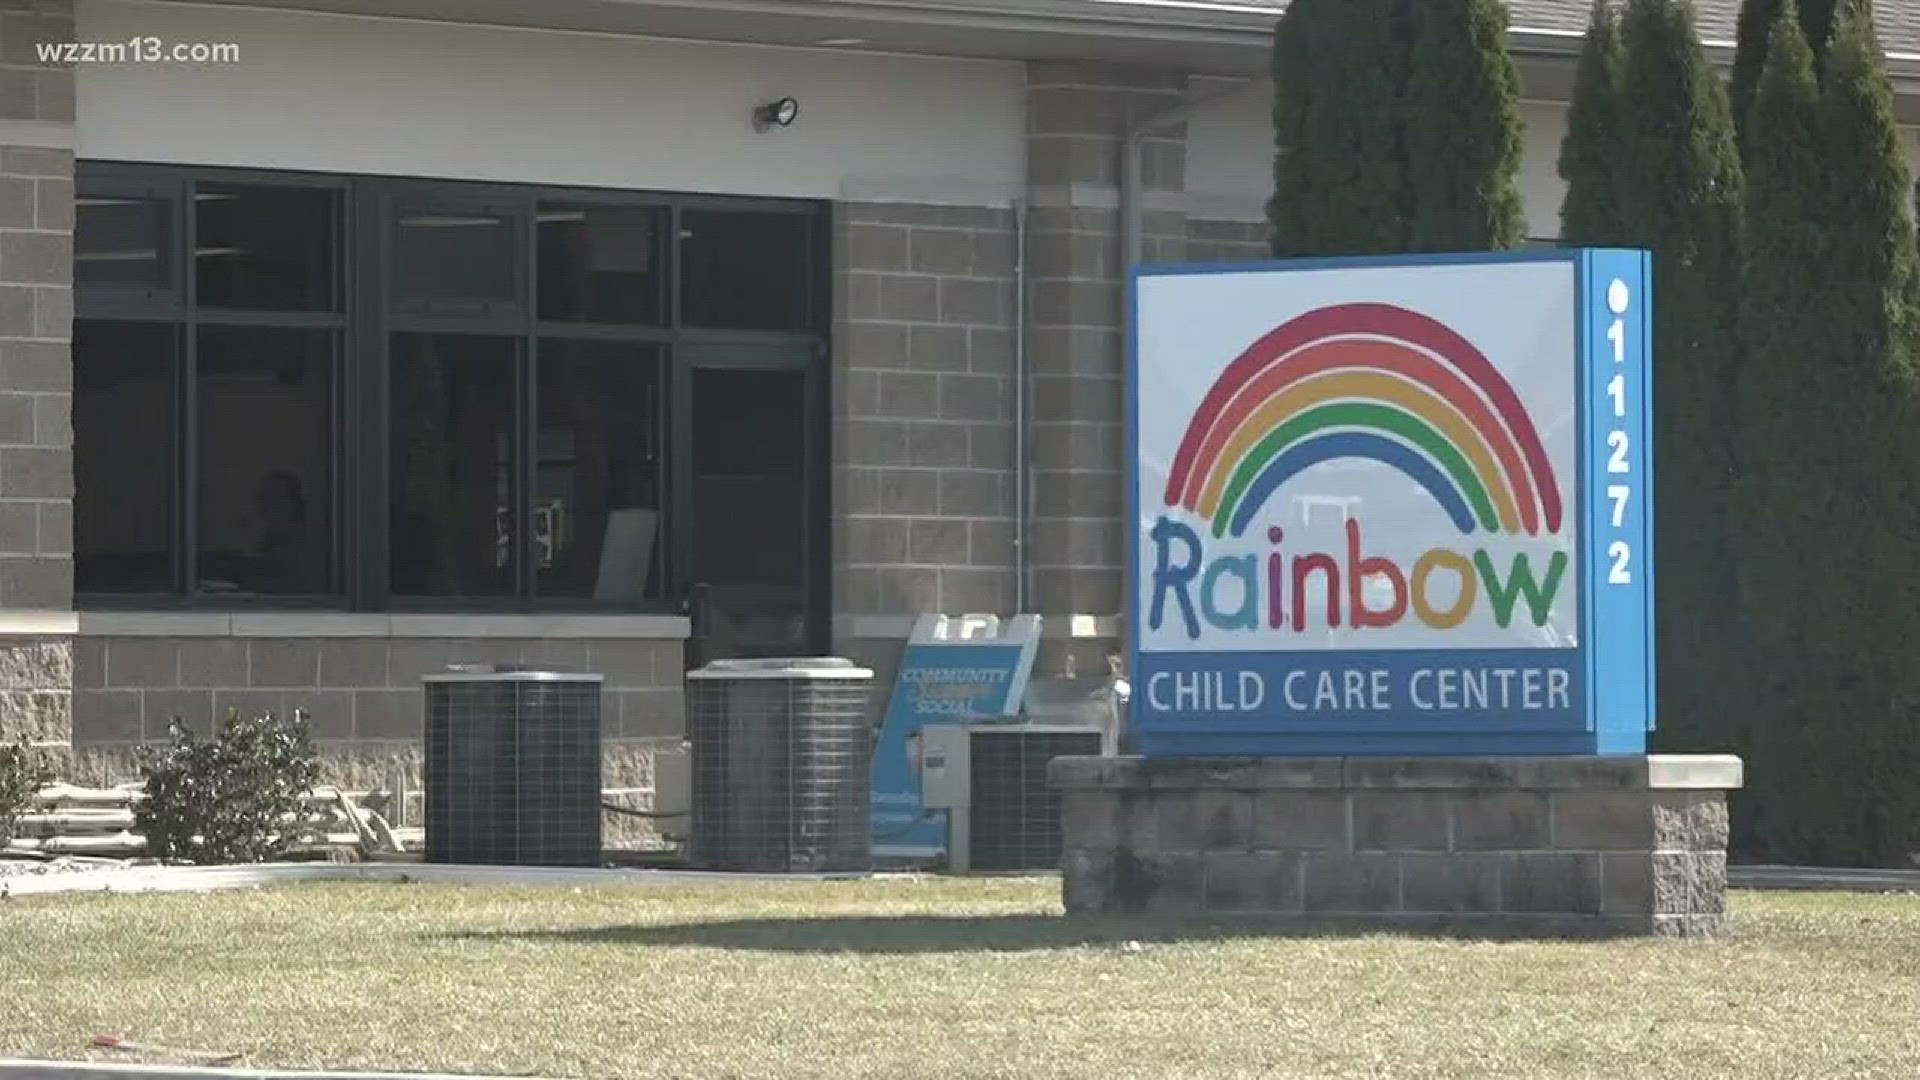 Rainbow Child Care in Allendale under investigation